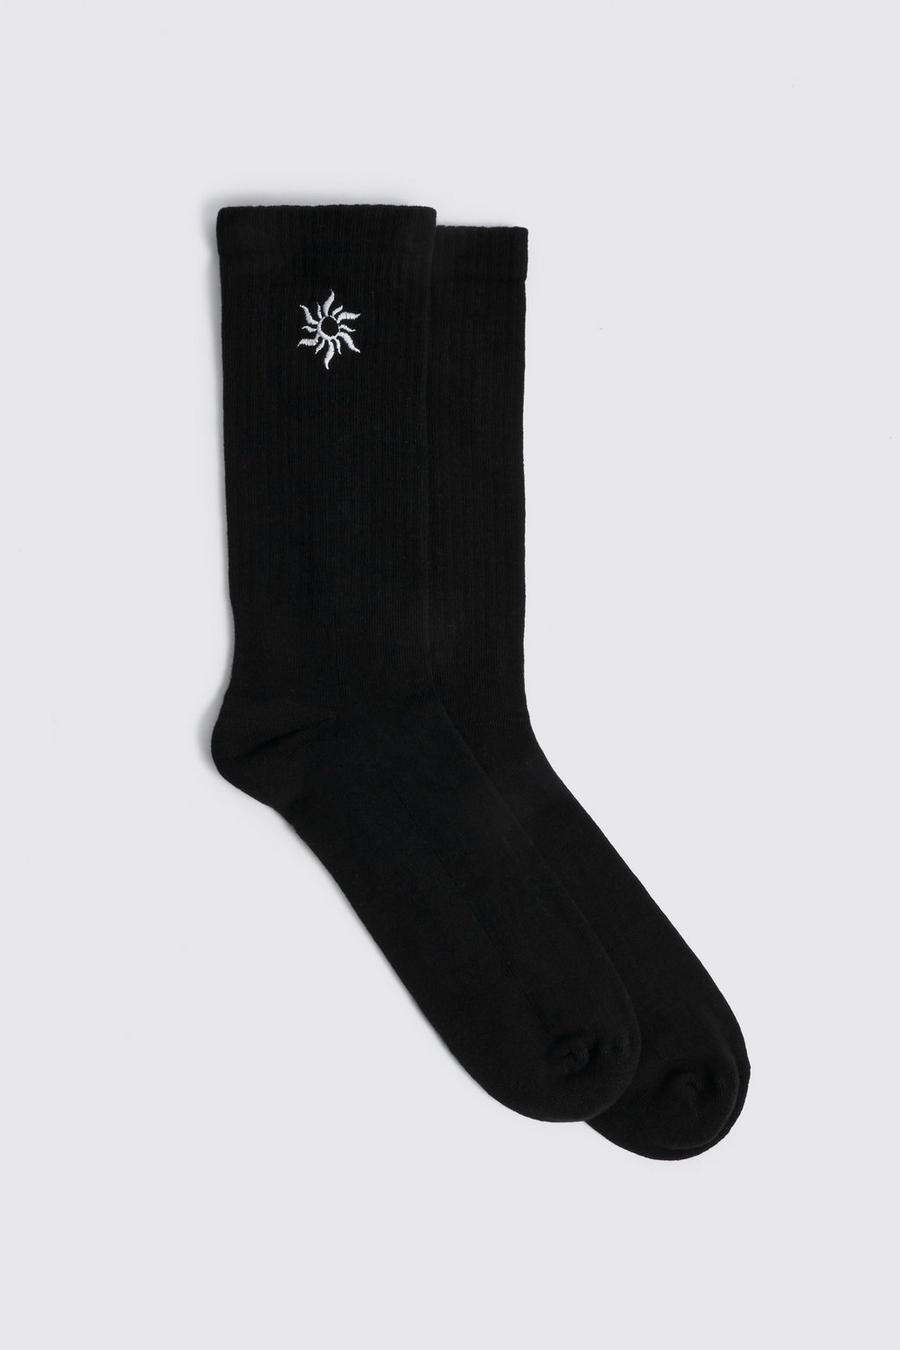 Black Embroidered Star Sock